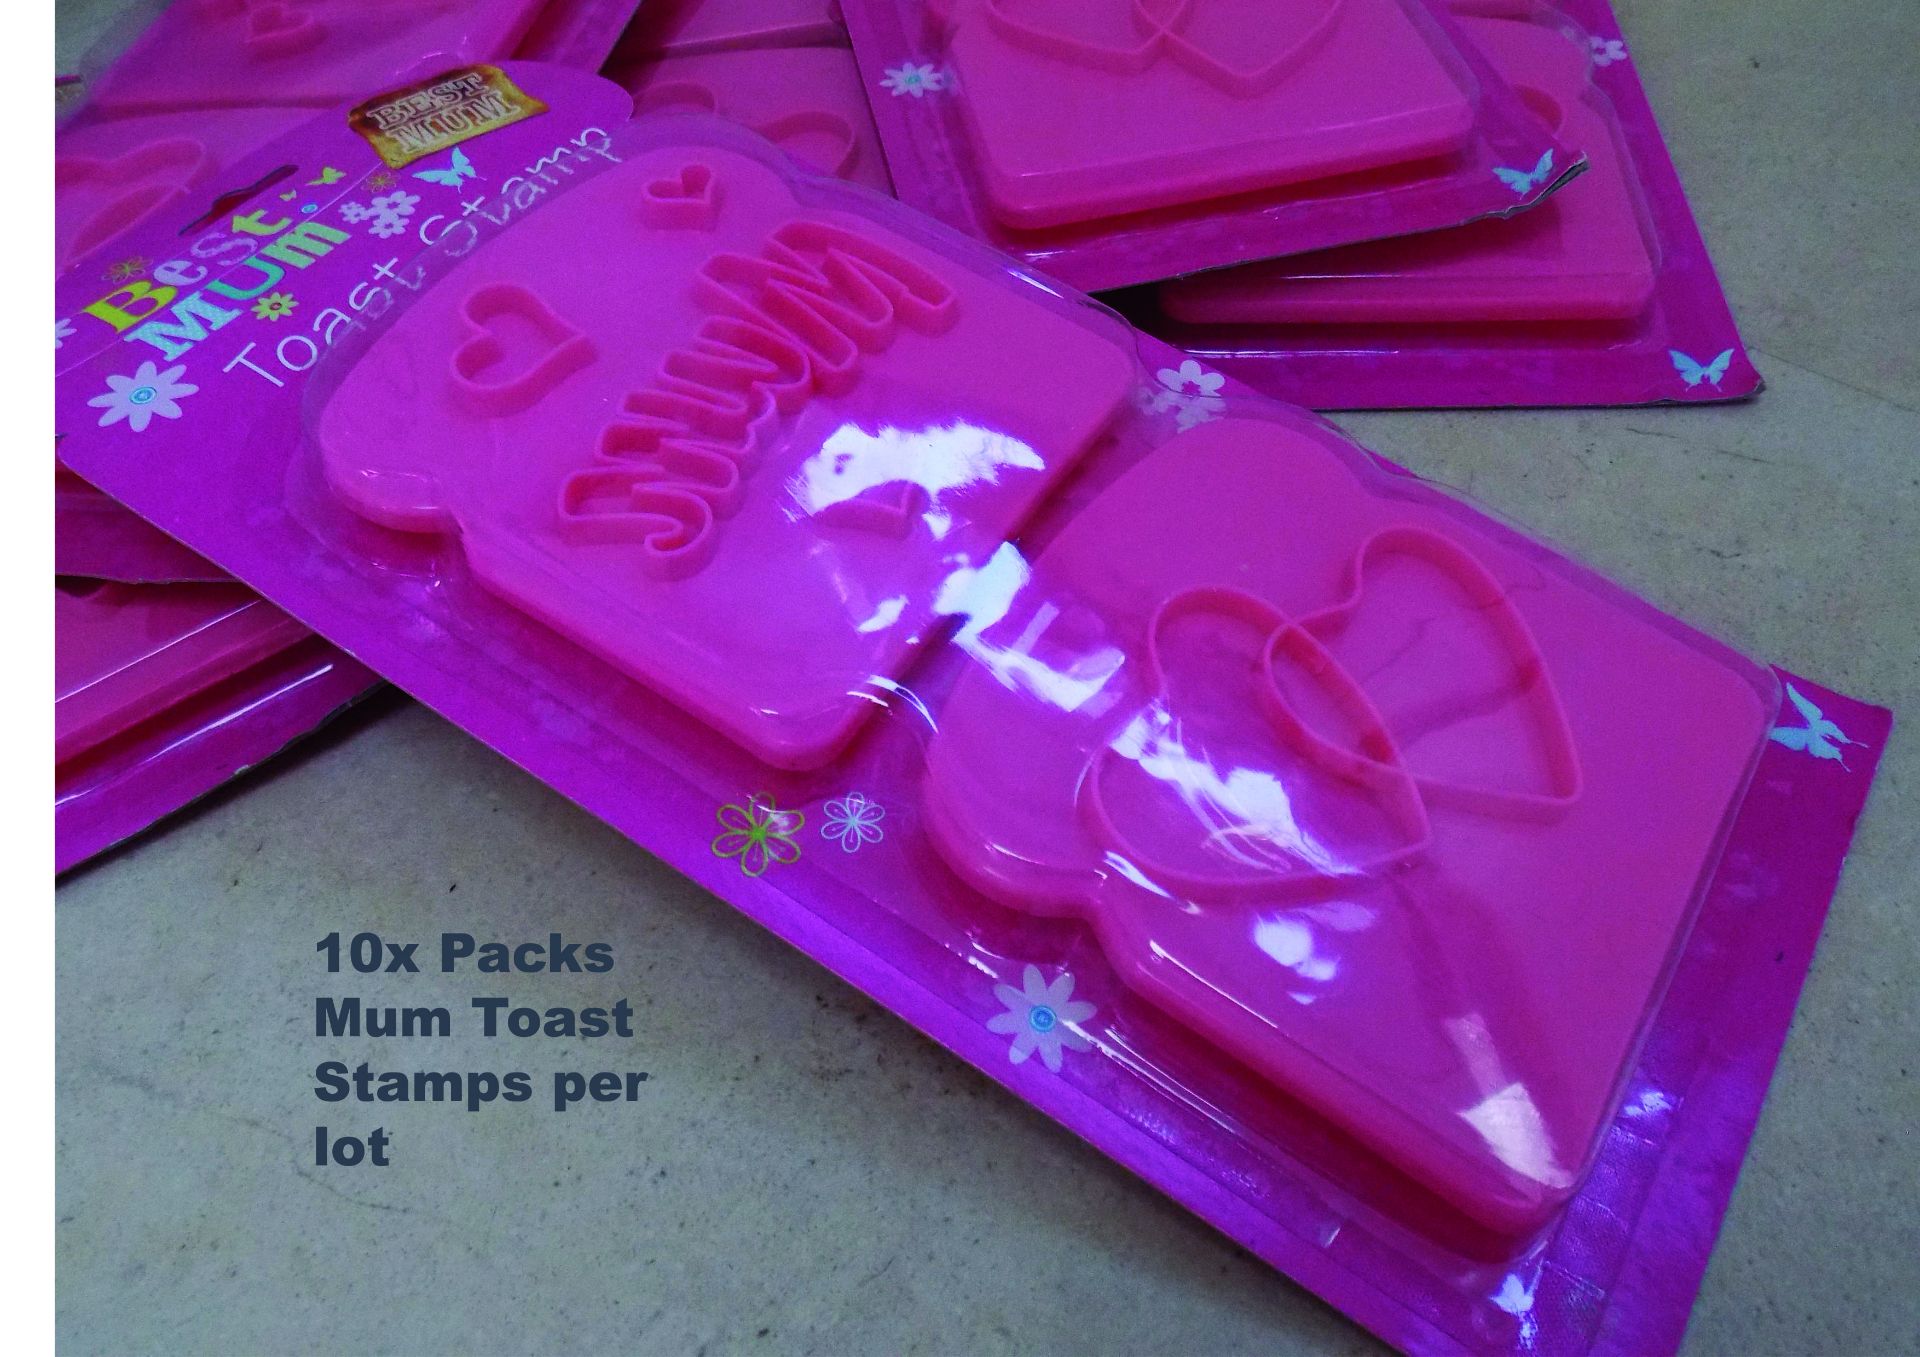 10x "Mum" Toast Stamp Sets - Image 2 of 5